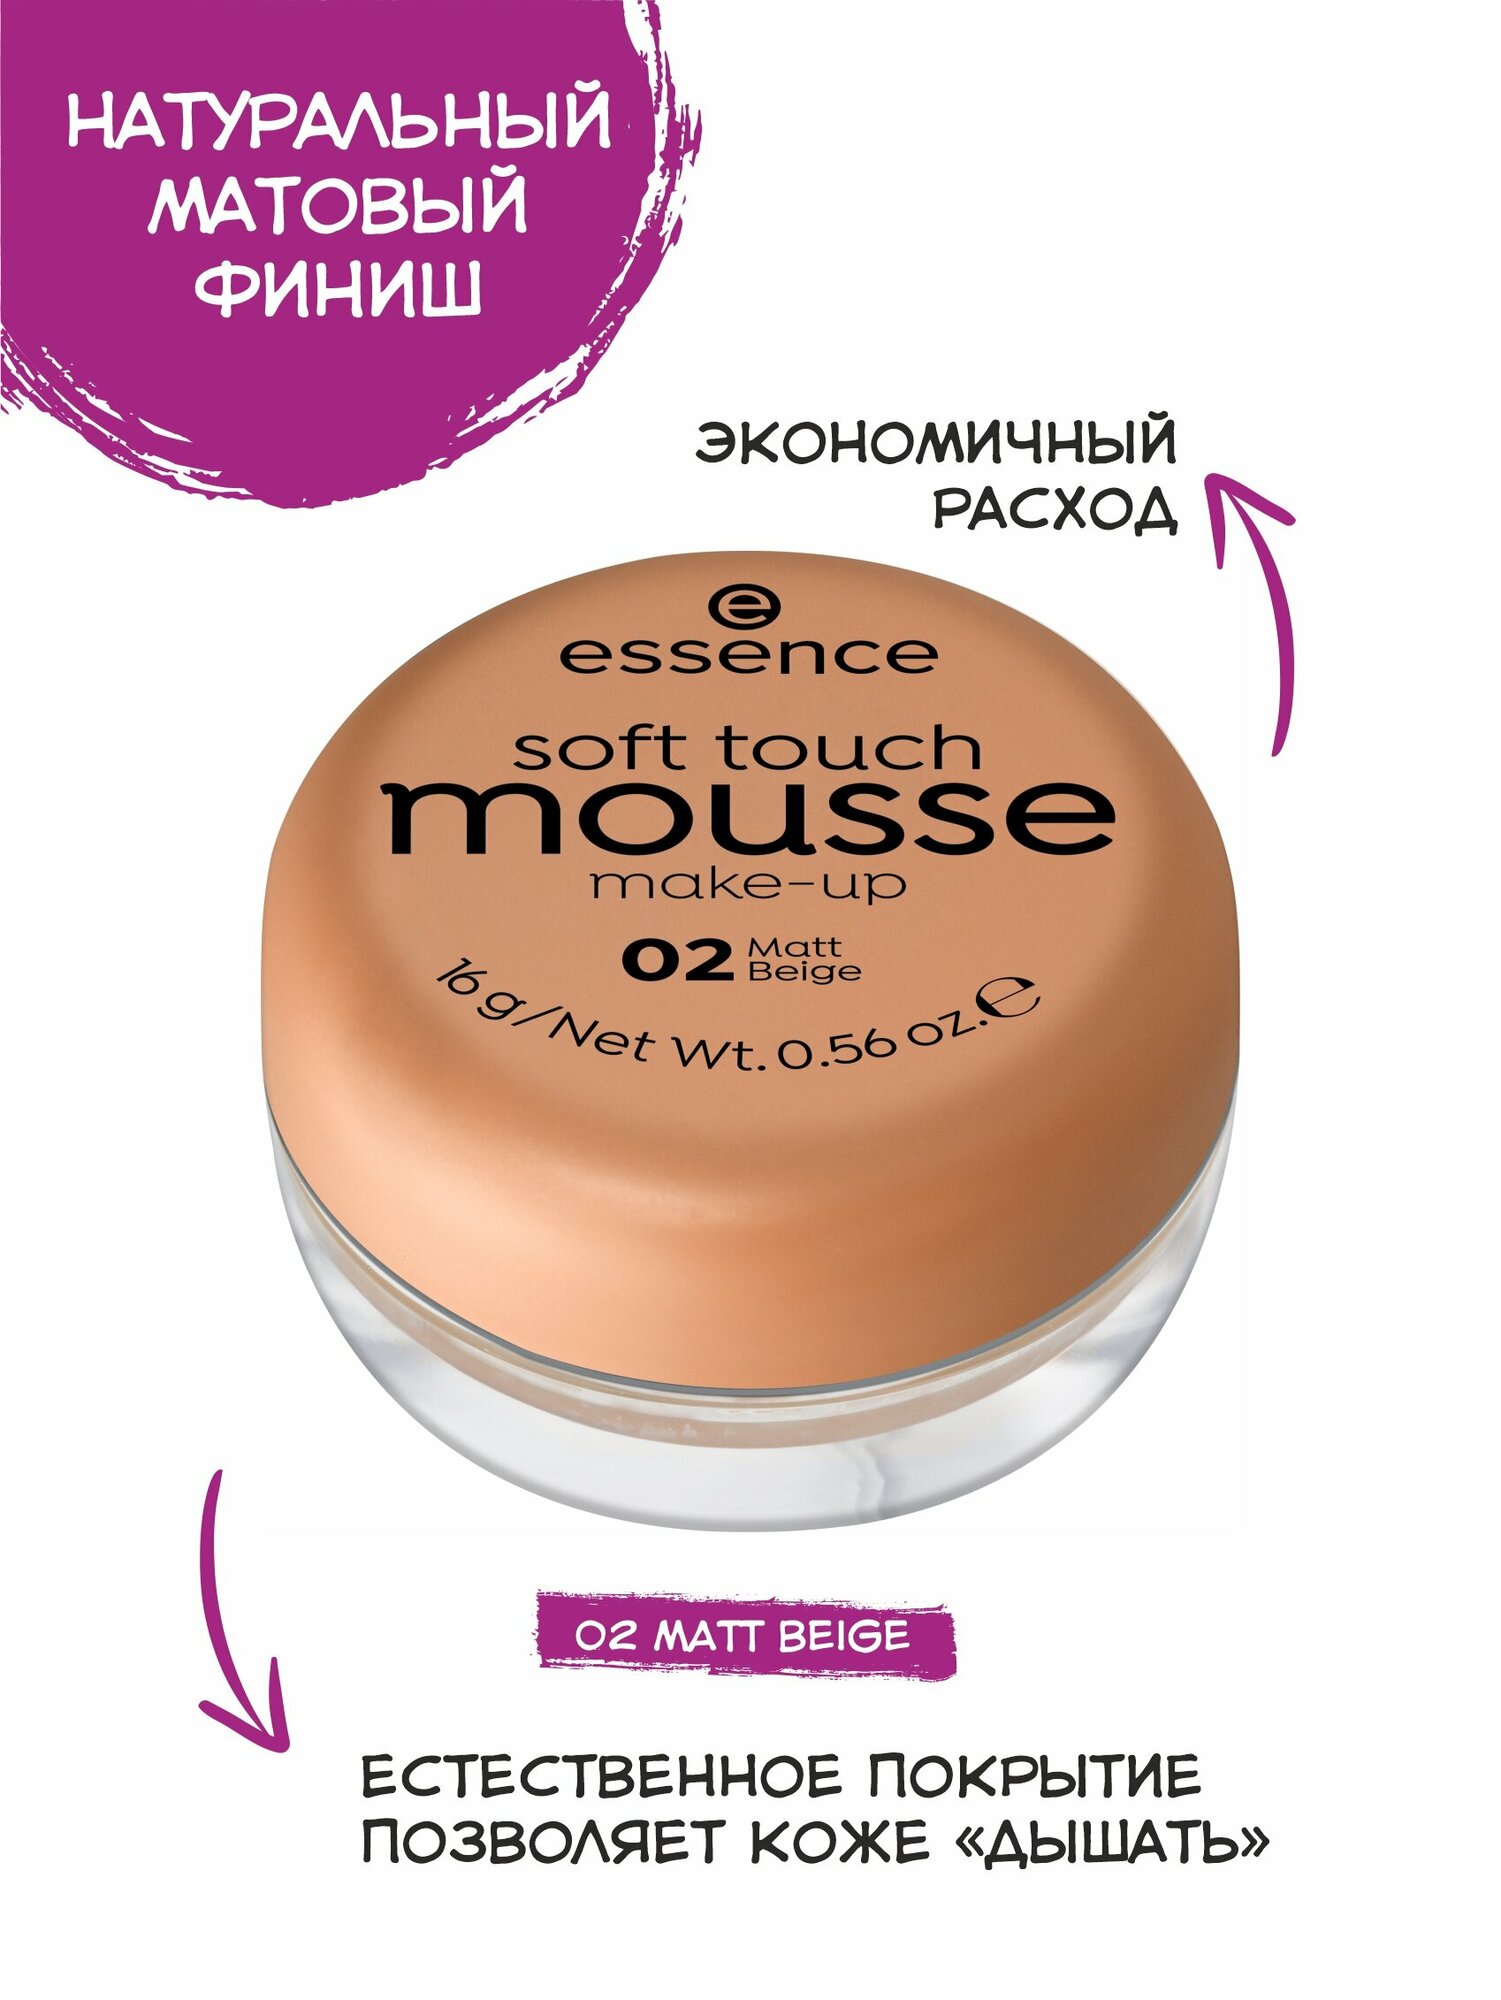 Тональный мусс Soft touch mousse make-up